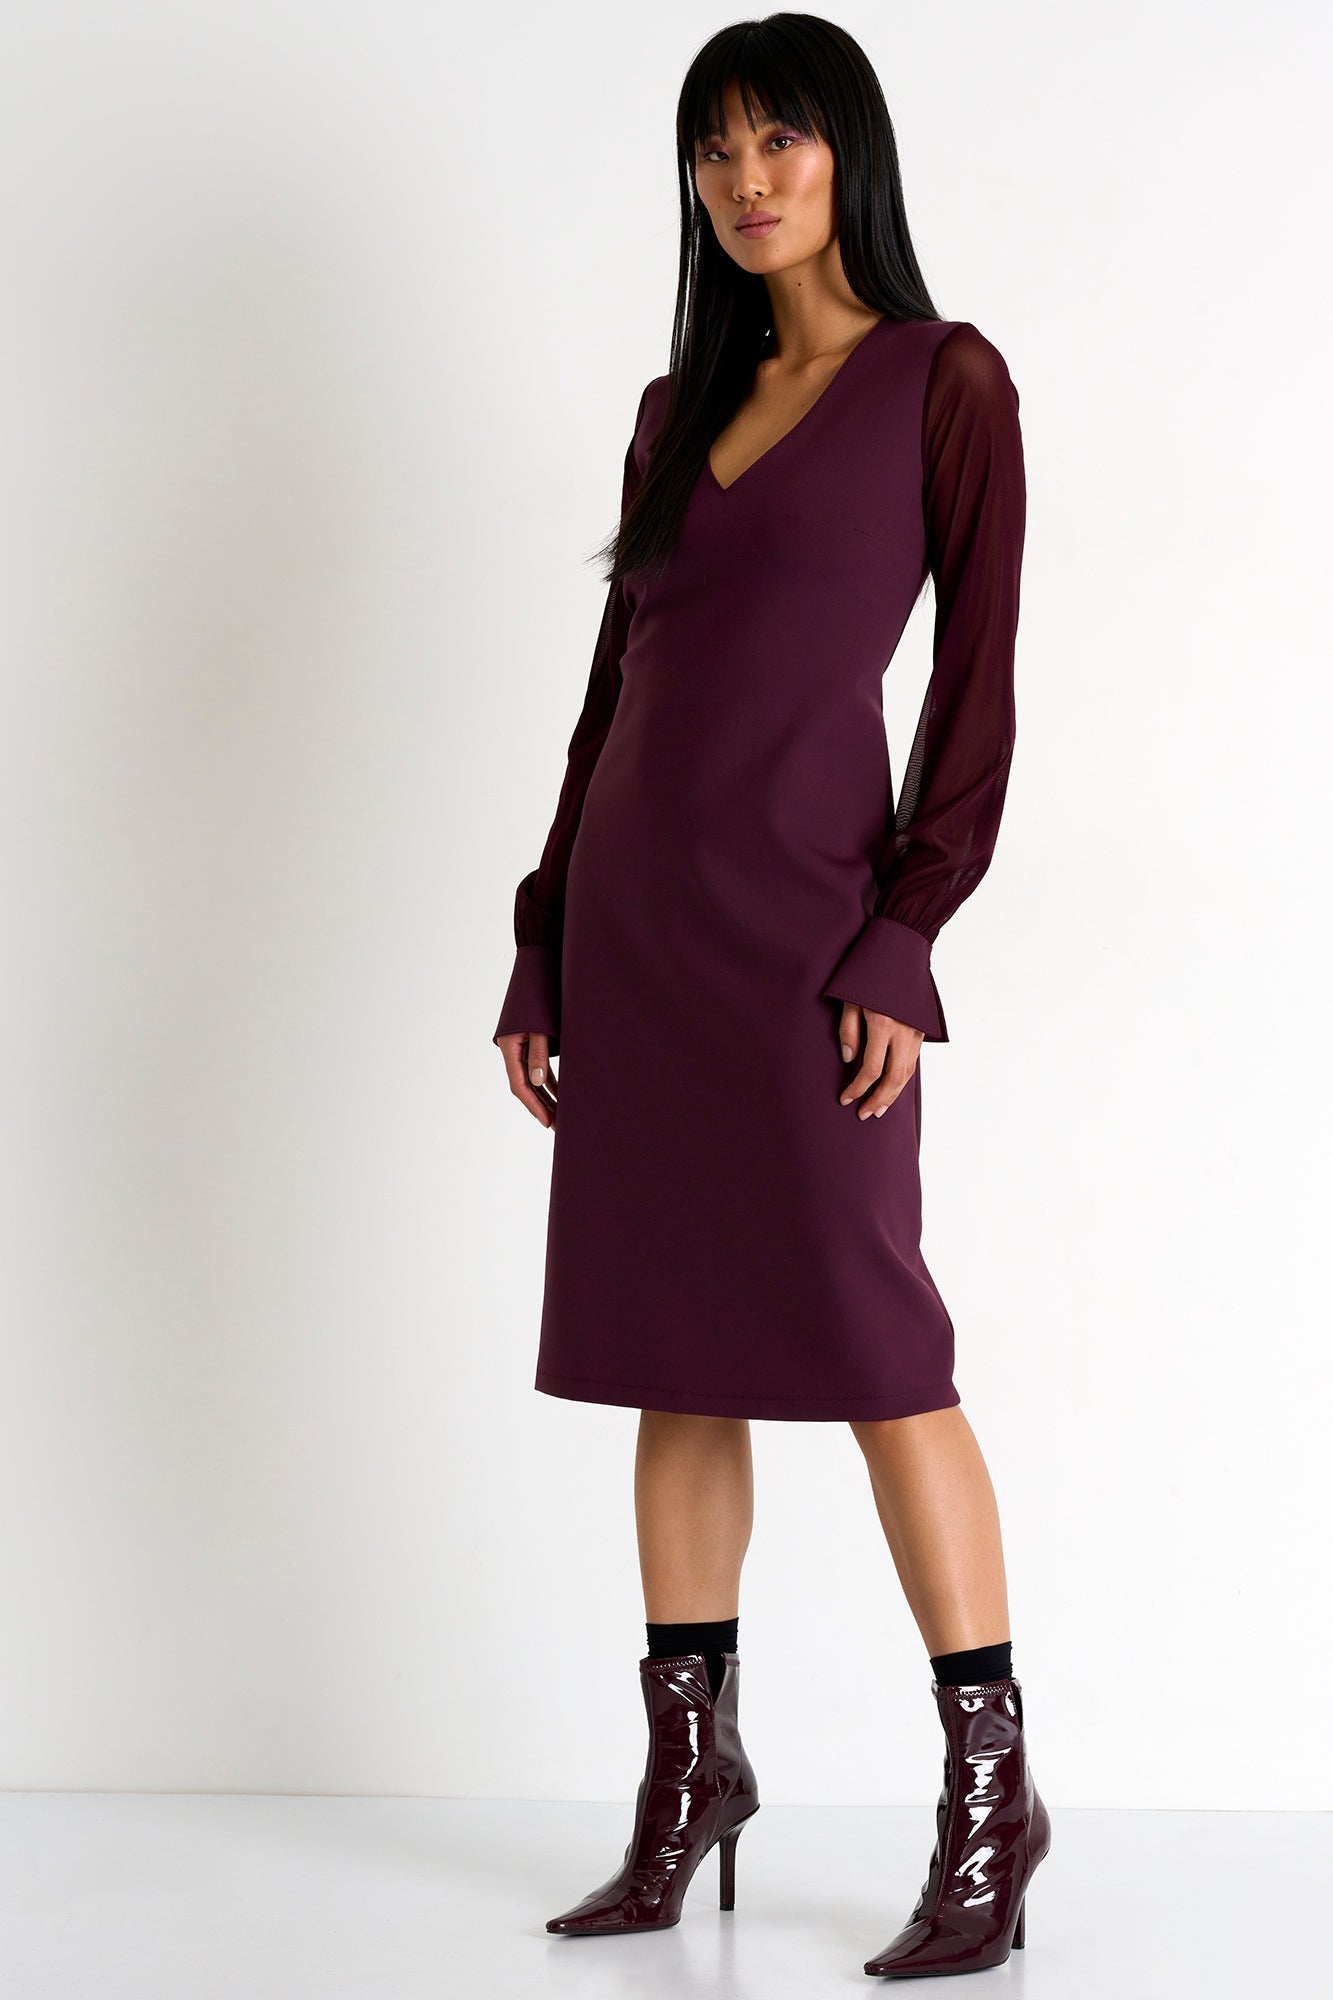 Sheer Sleeve Elegant Dress - 52367-75-400 02 / 400 Burgundy / 75% POLYAMIDE, 25% ELASTANE